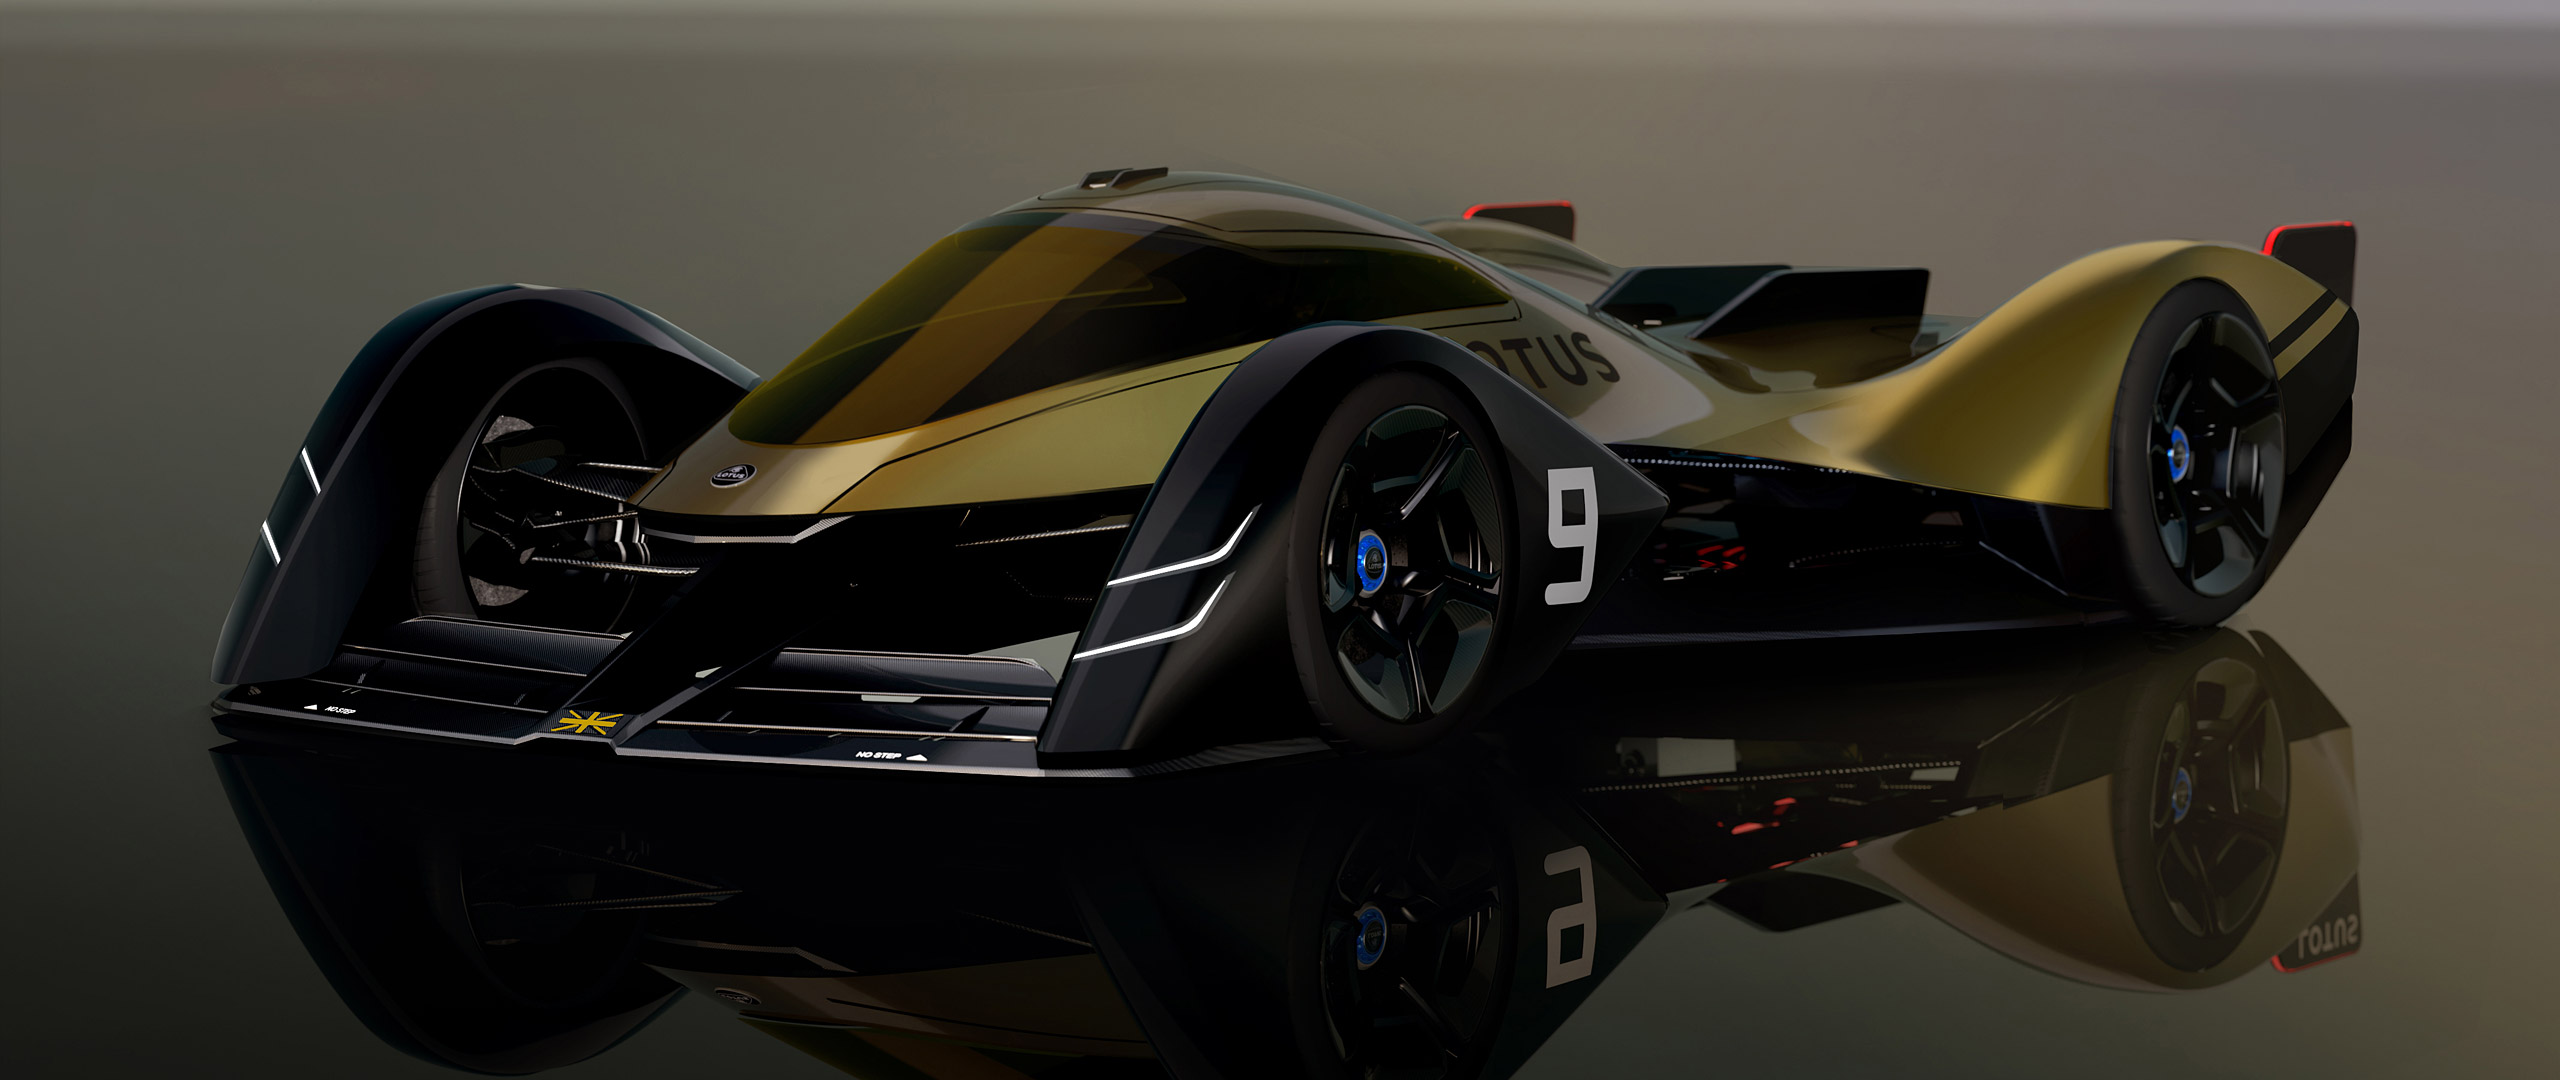  2021 Lotus E-R9 Concept Wallpaper.